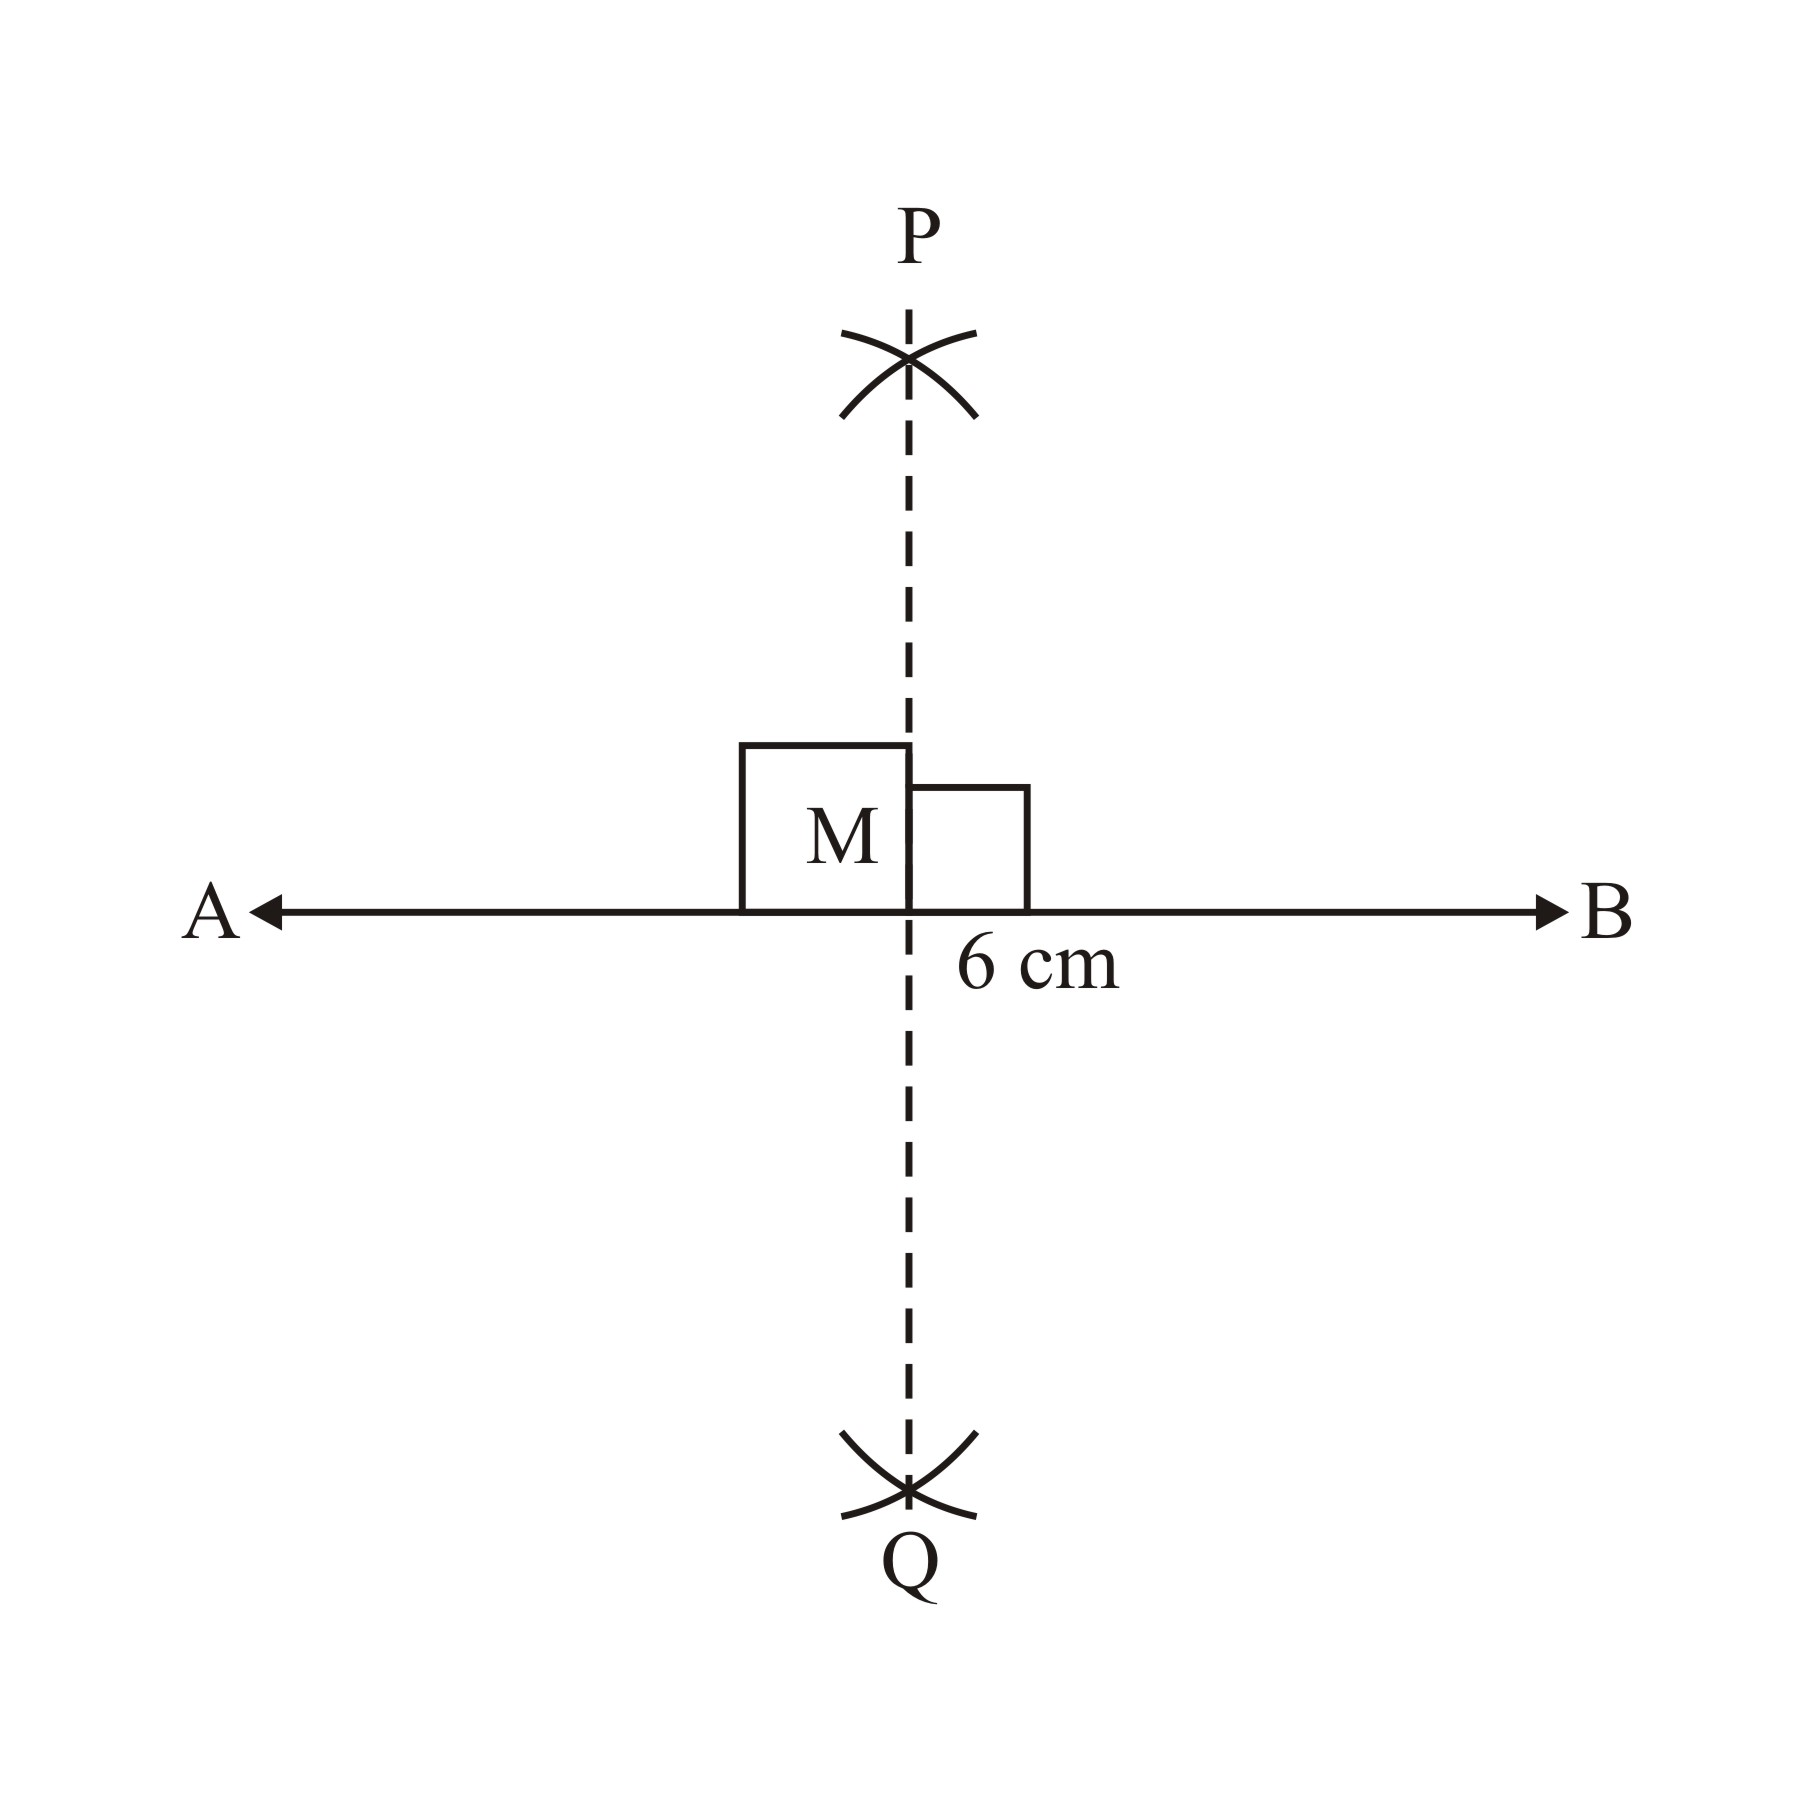 Bisecting lines and angles - KS3 Maths - BBC Bitesize